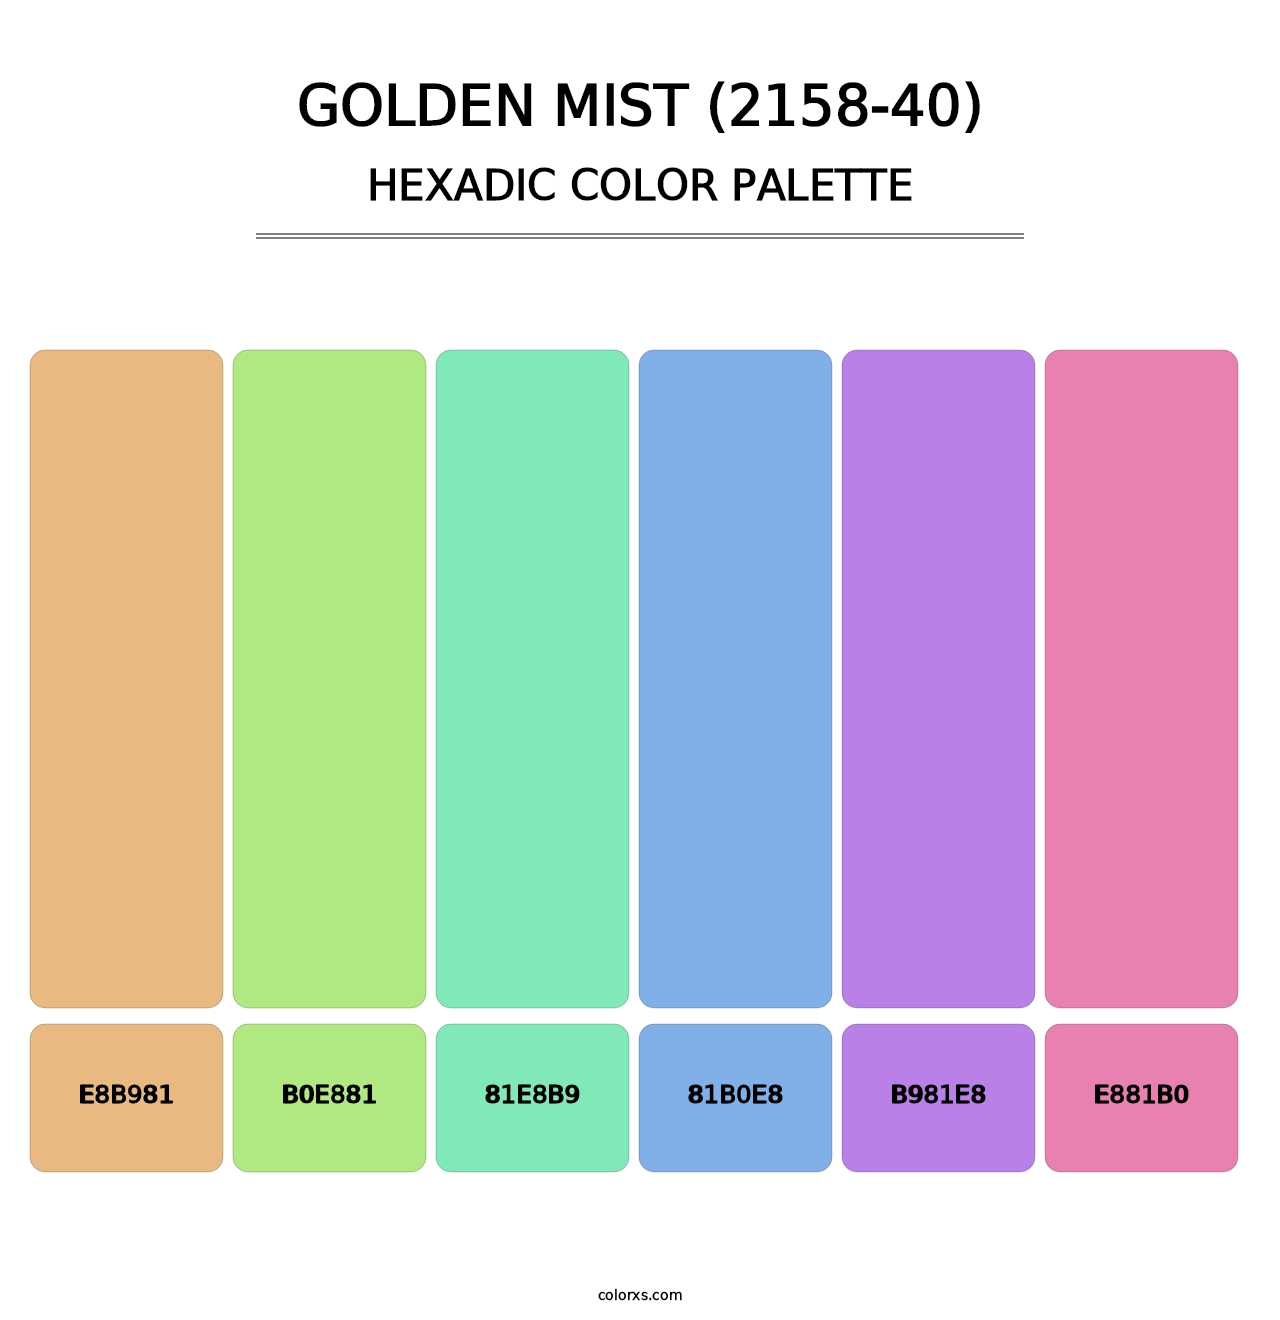 Golden Mist (2158-40) - Hexadic Color Palette